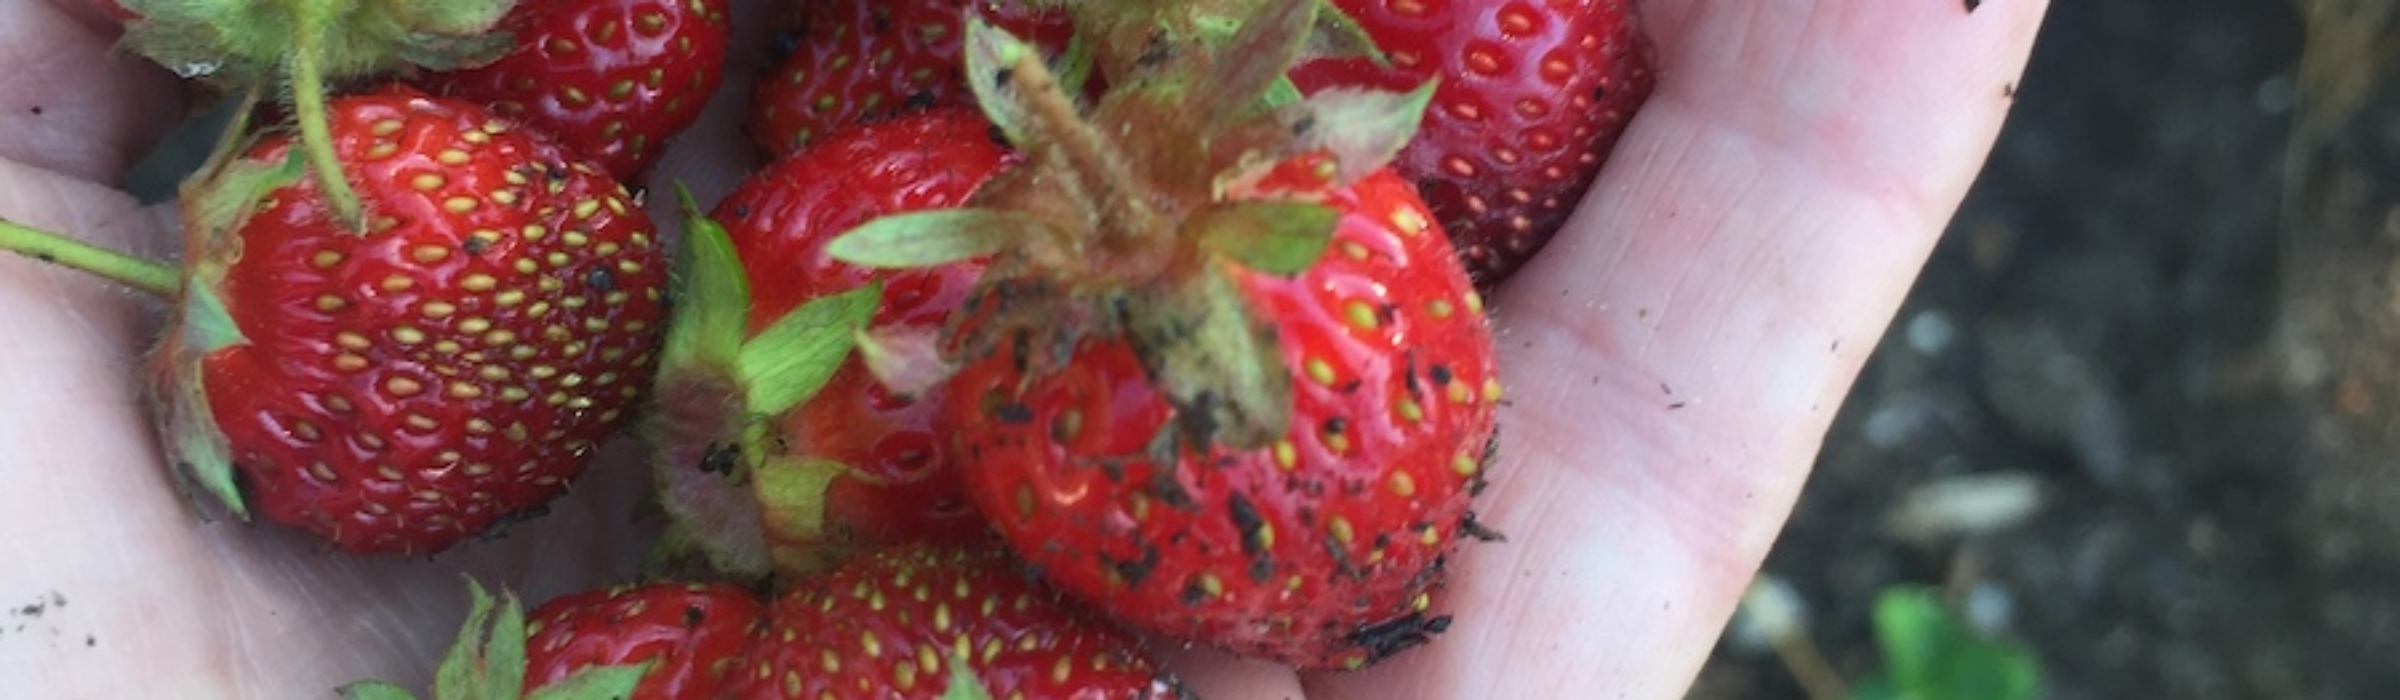 HandfulEverbearingstrawberries